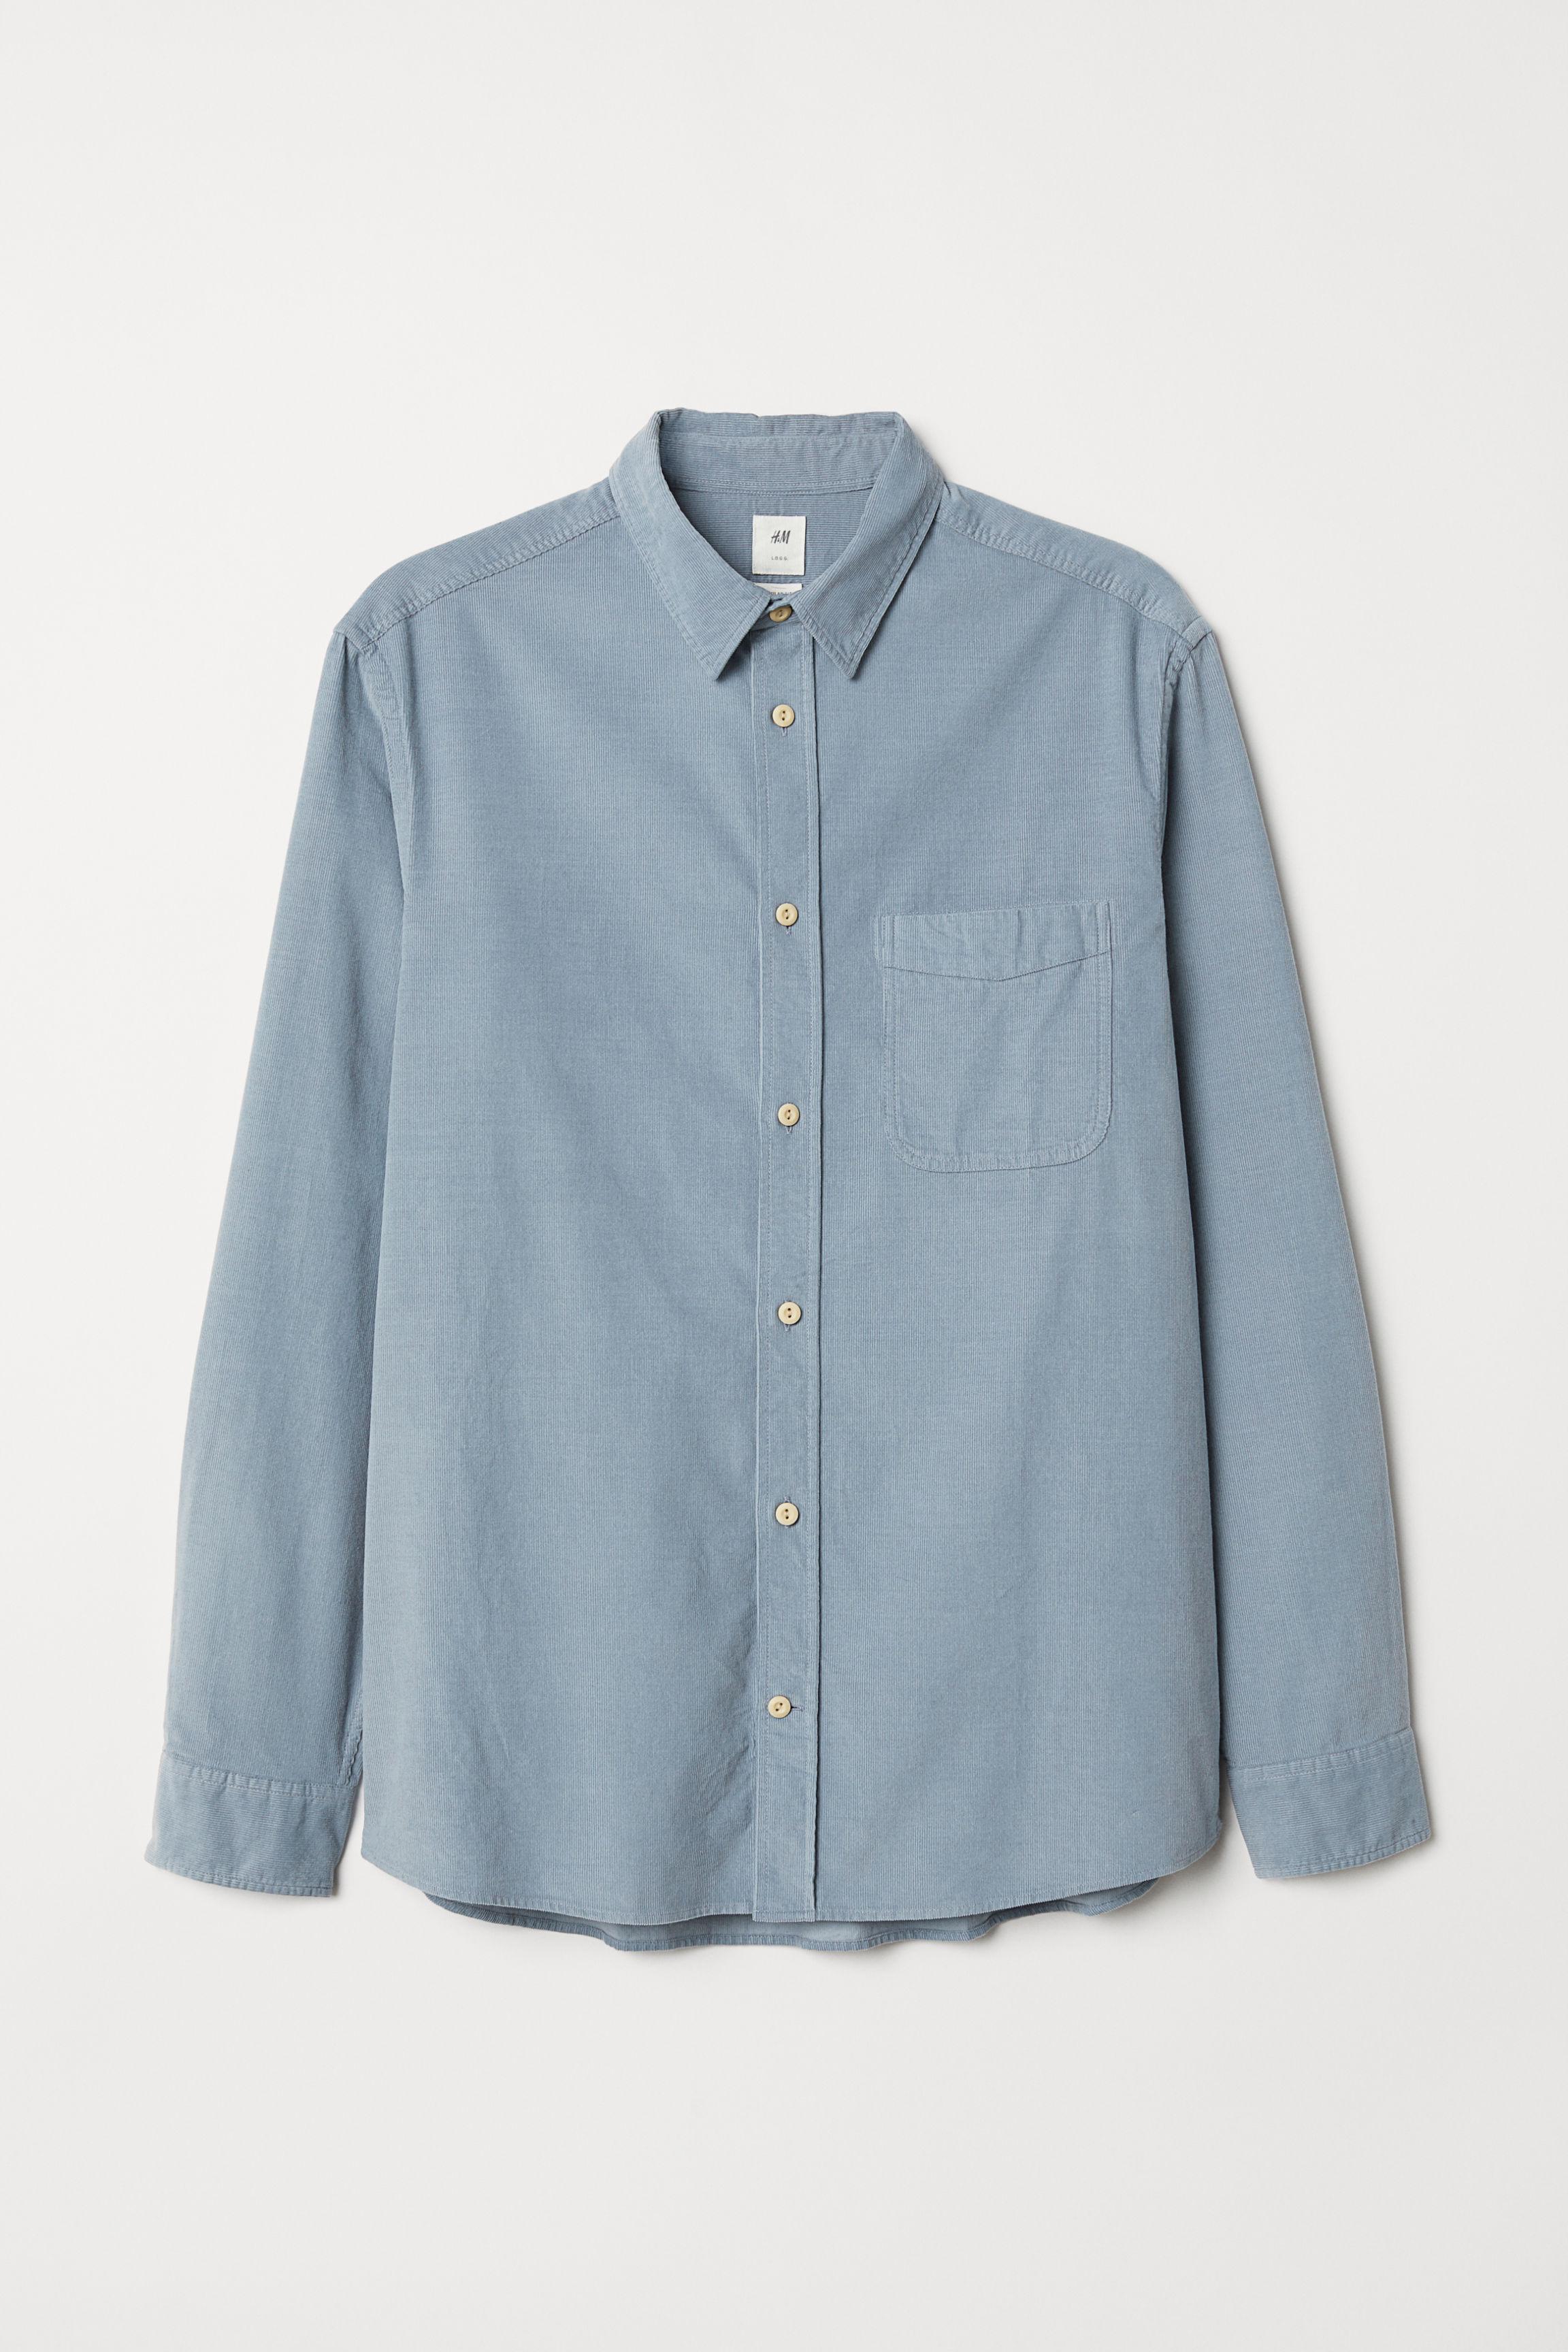 H&M Regular Fit Corduroy Shirt in Light Dusky Blue (Blue ...